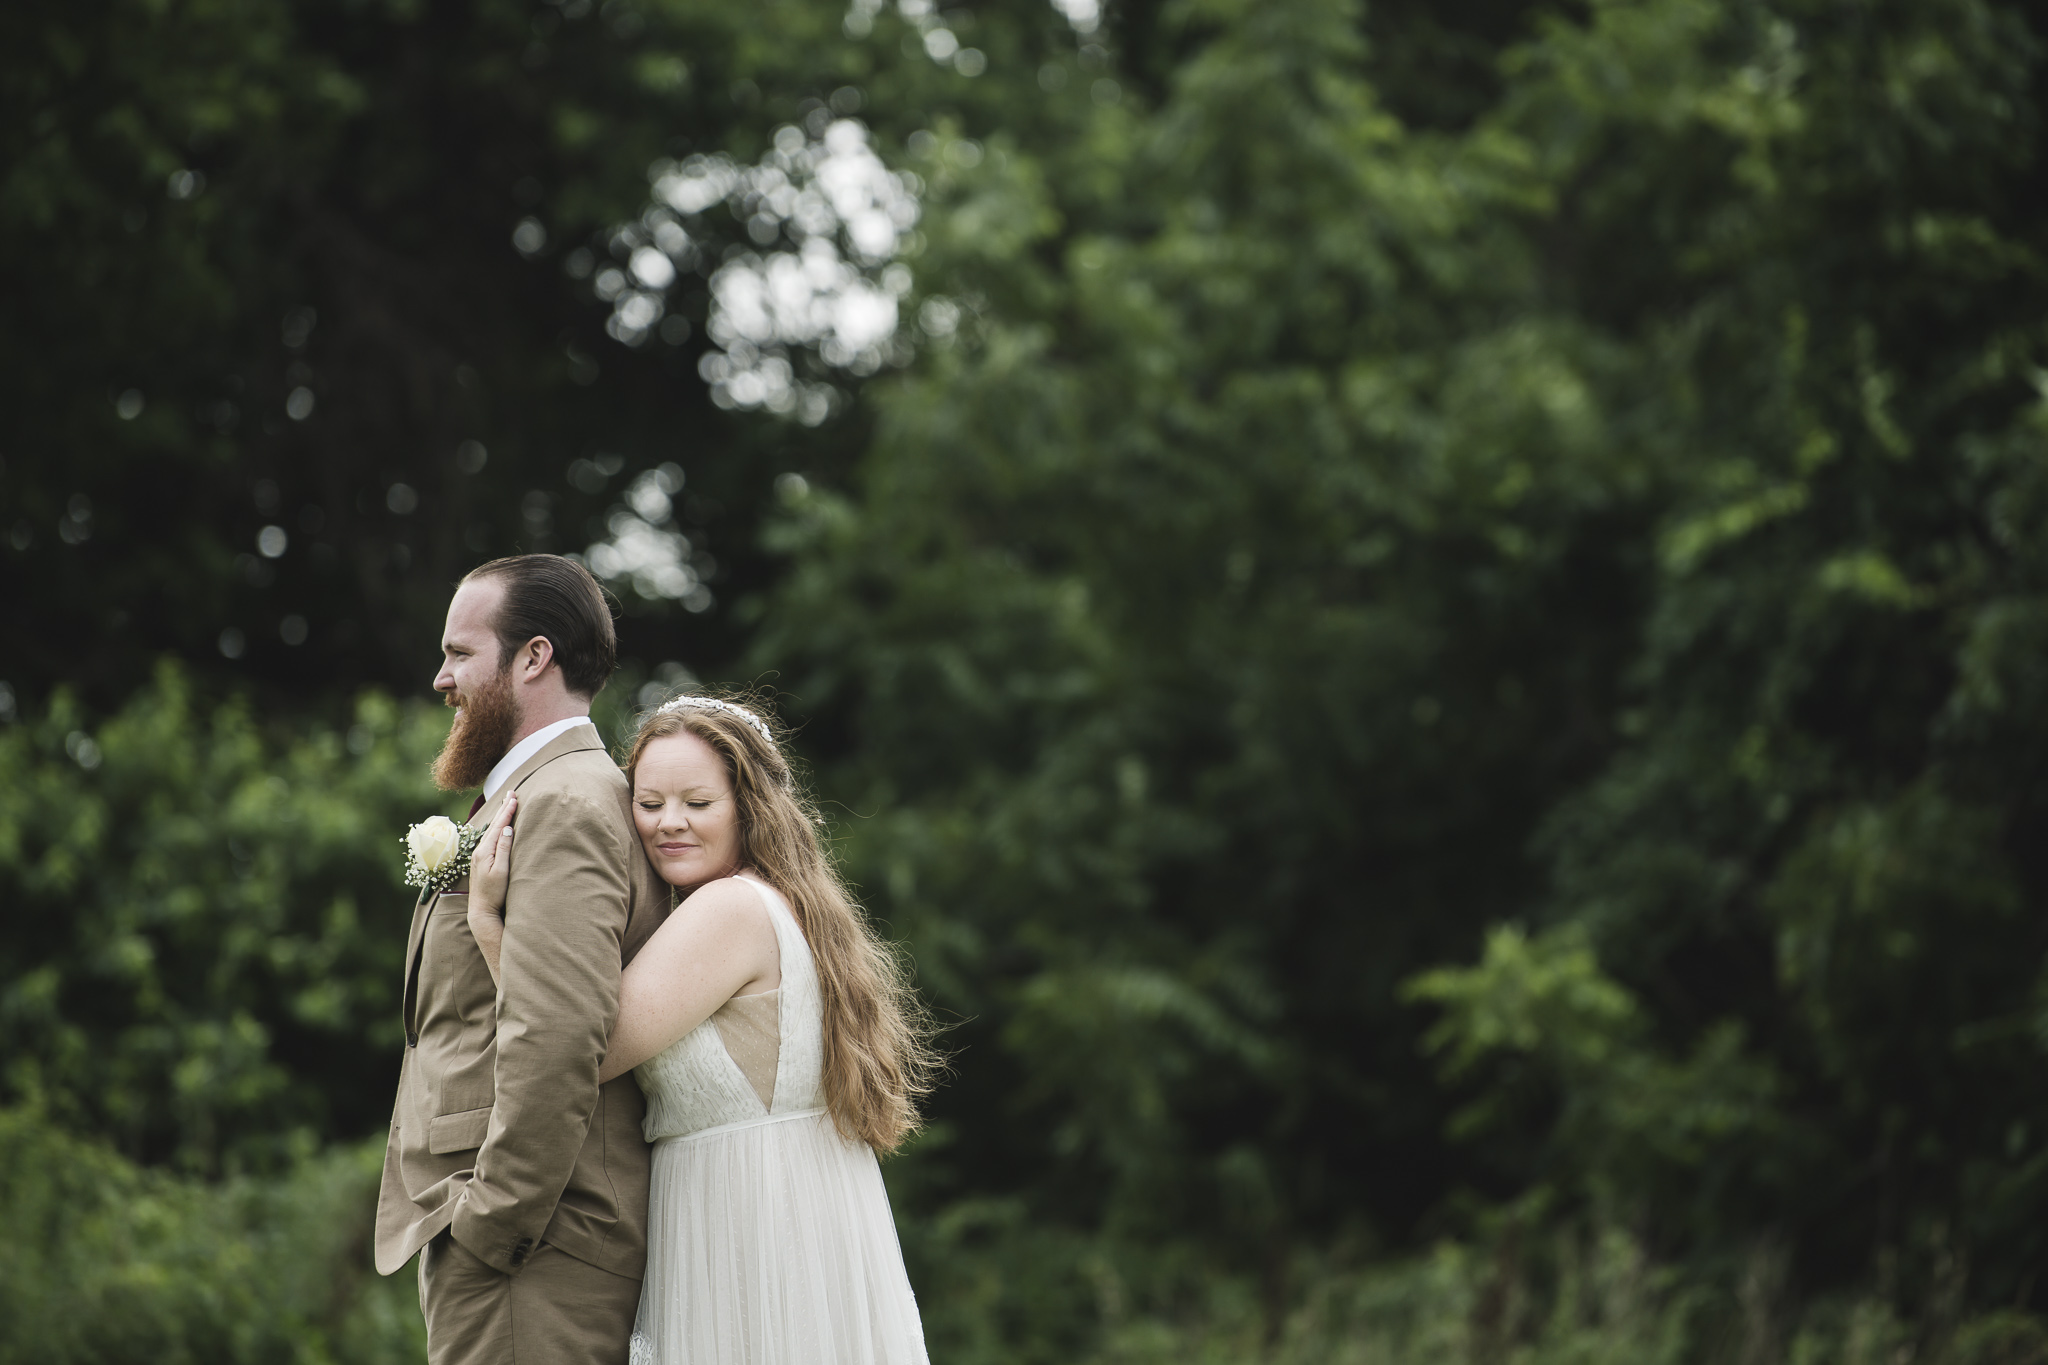 Islip Grange Park Wedding Photos | Lotus Wedding Photography